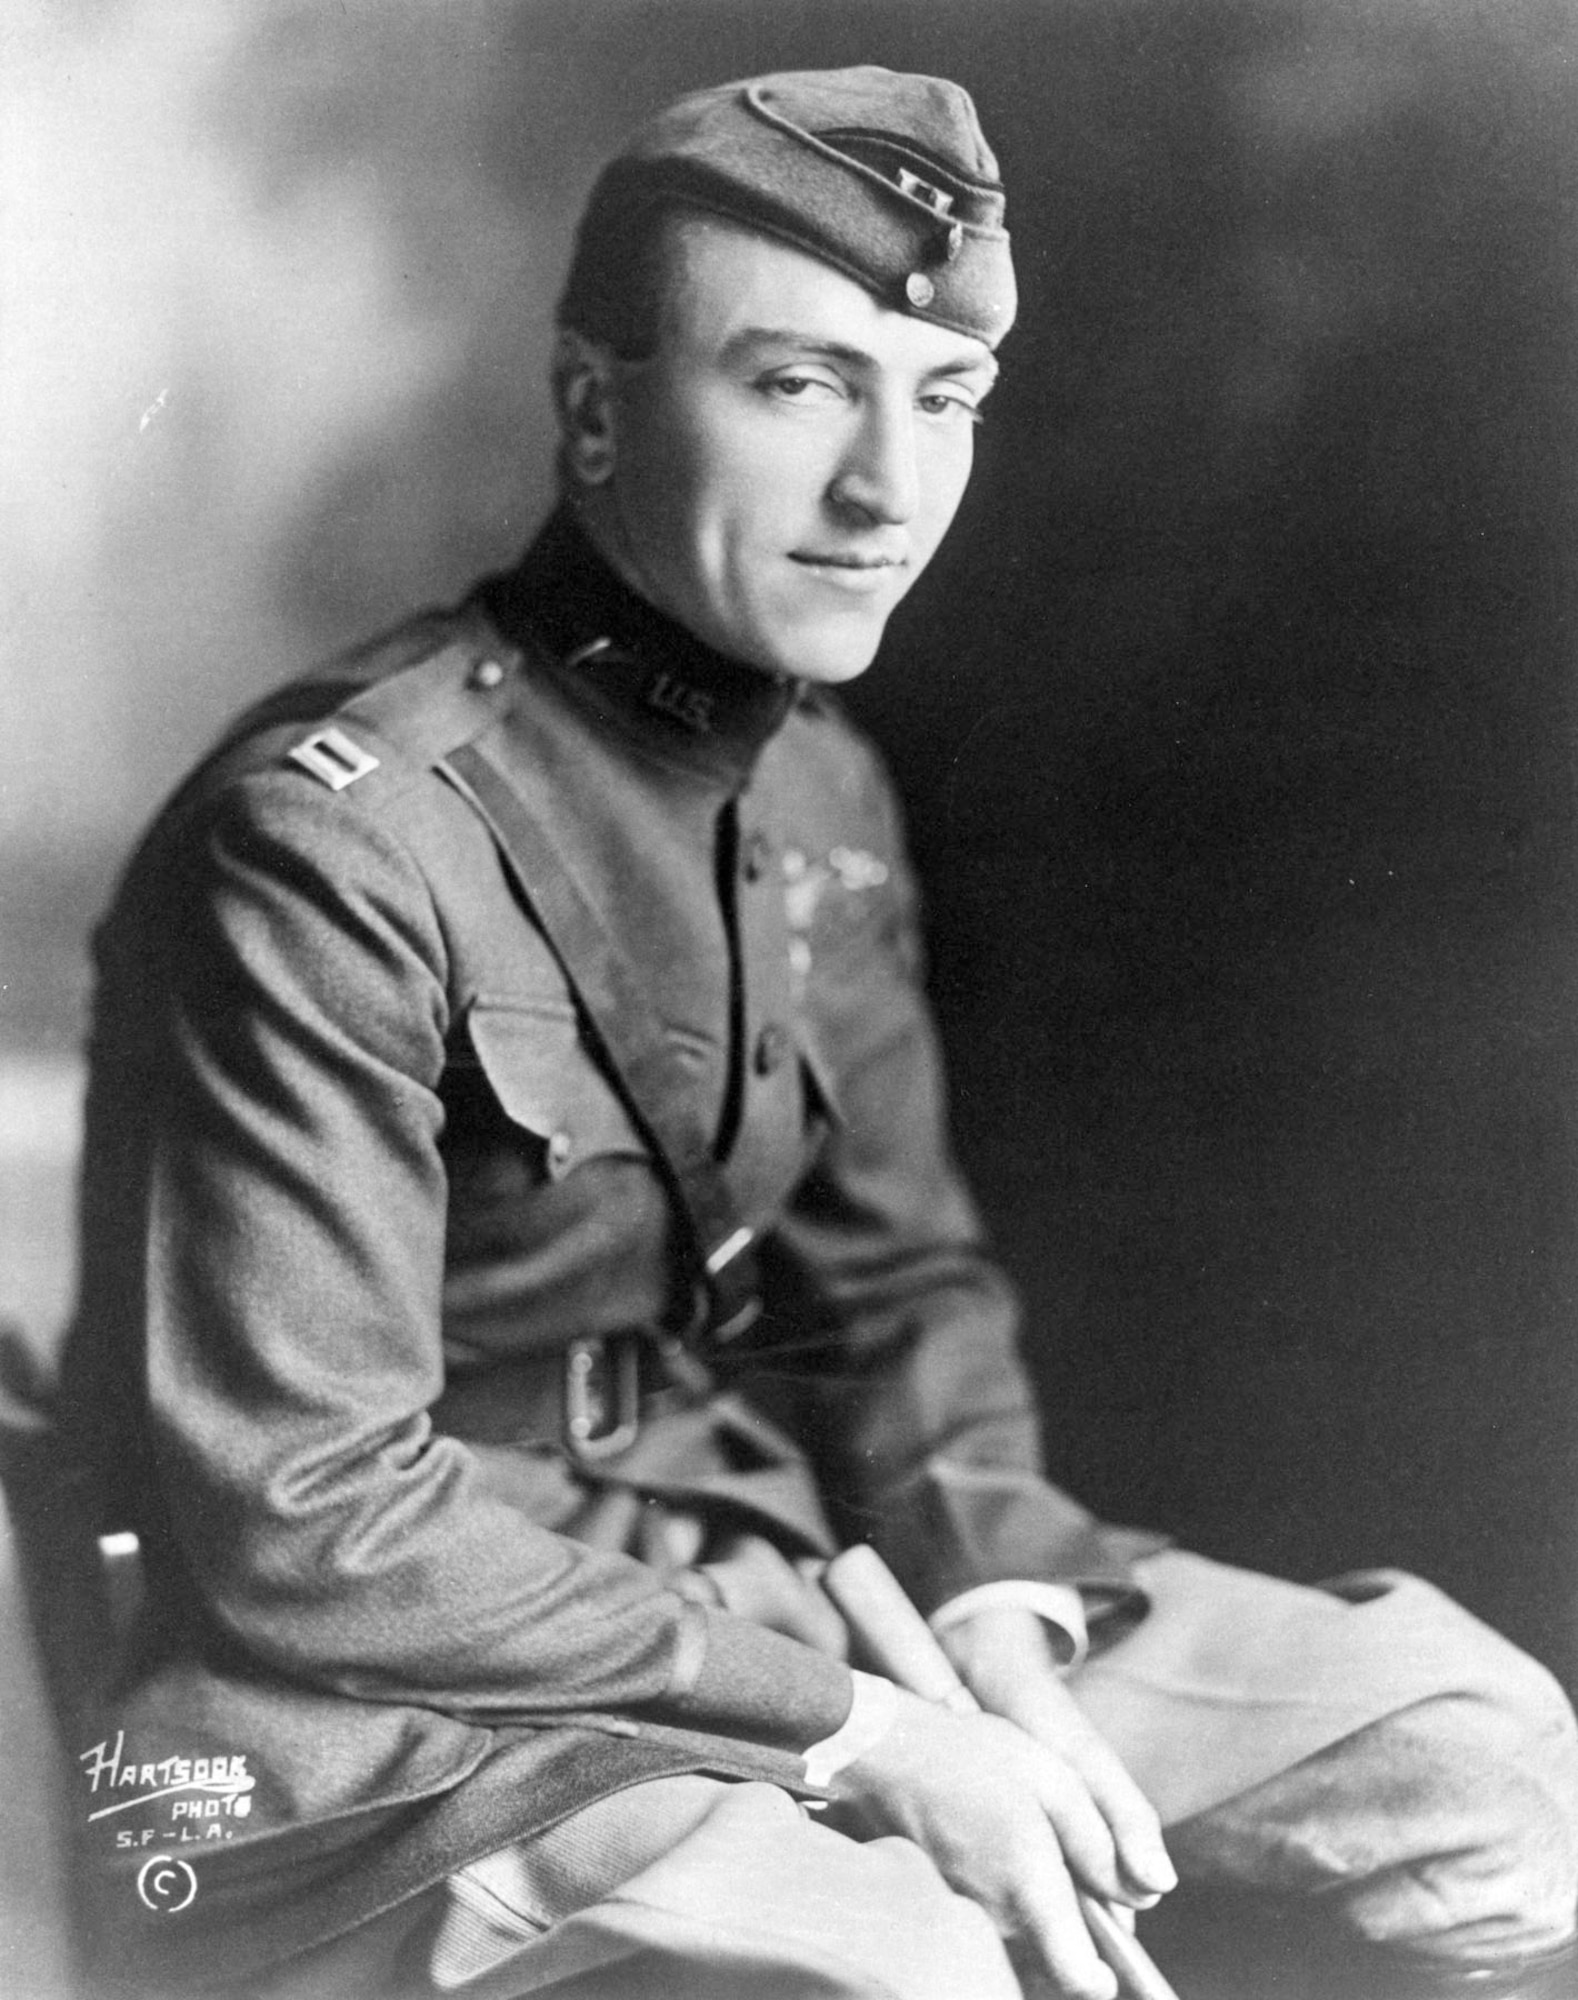 Capt. Eddie Rickenbacker. (U.S. Air Force photo)
WWI